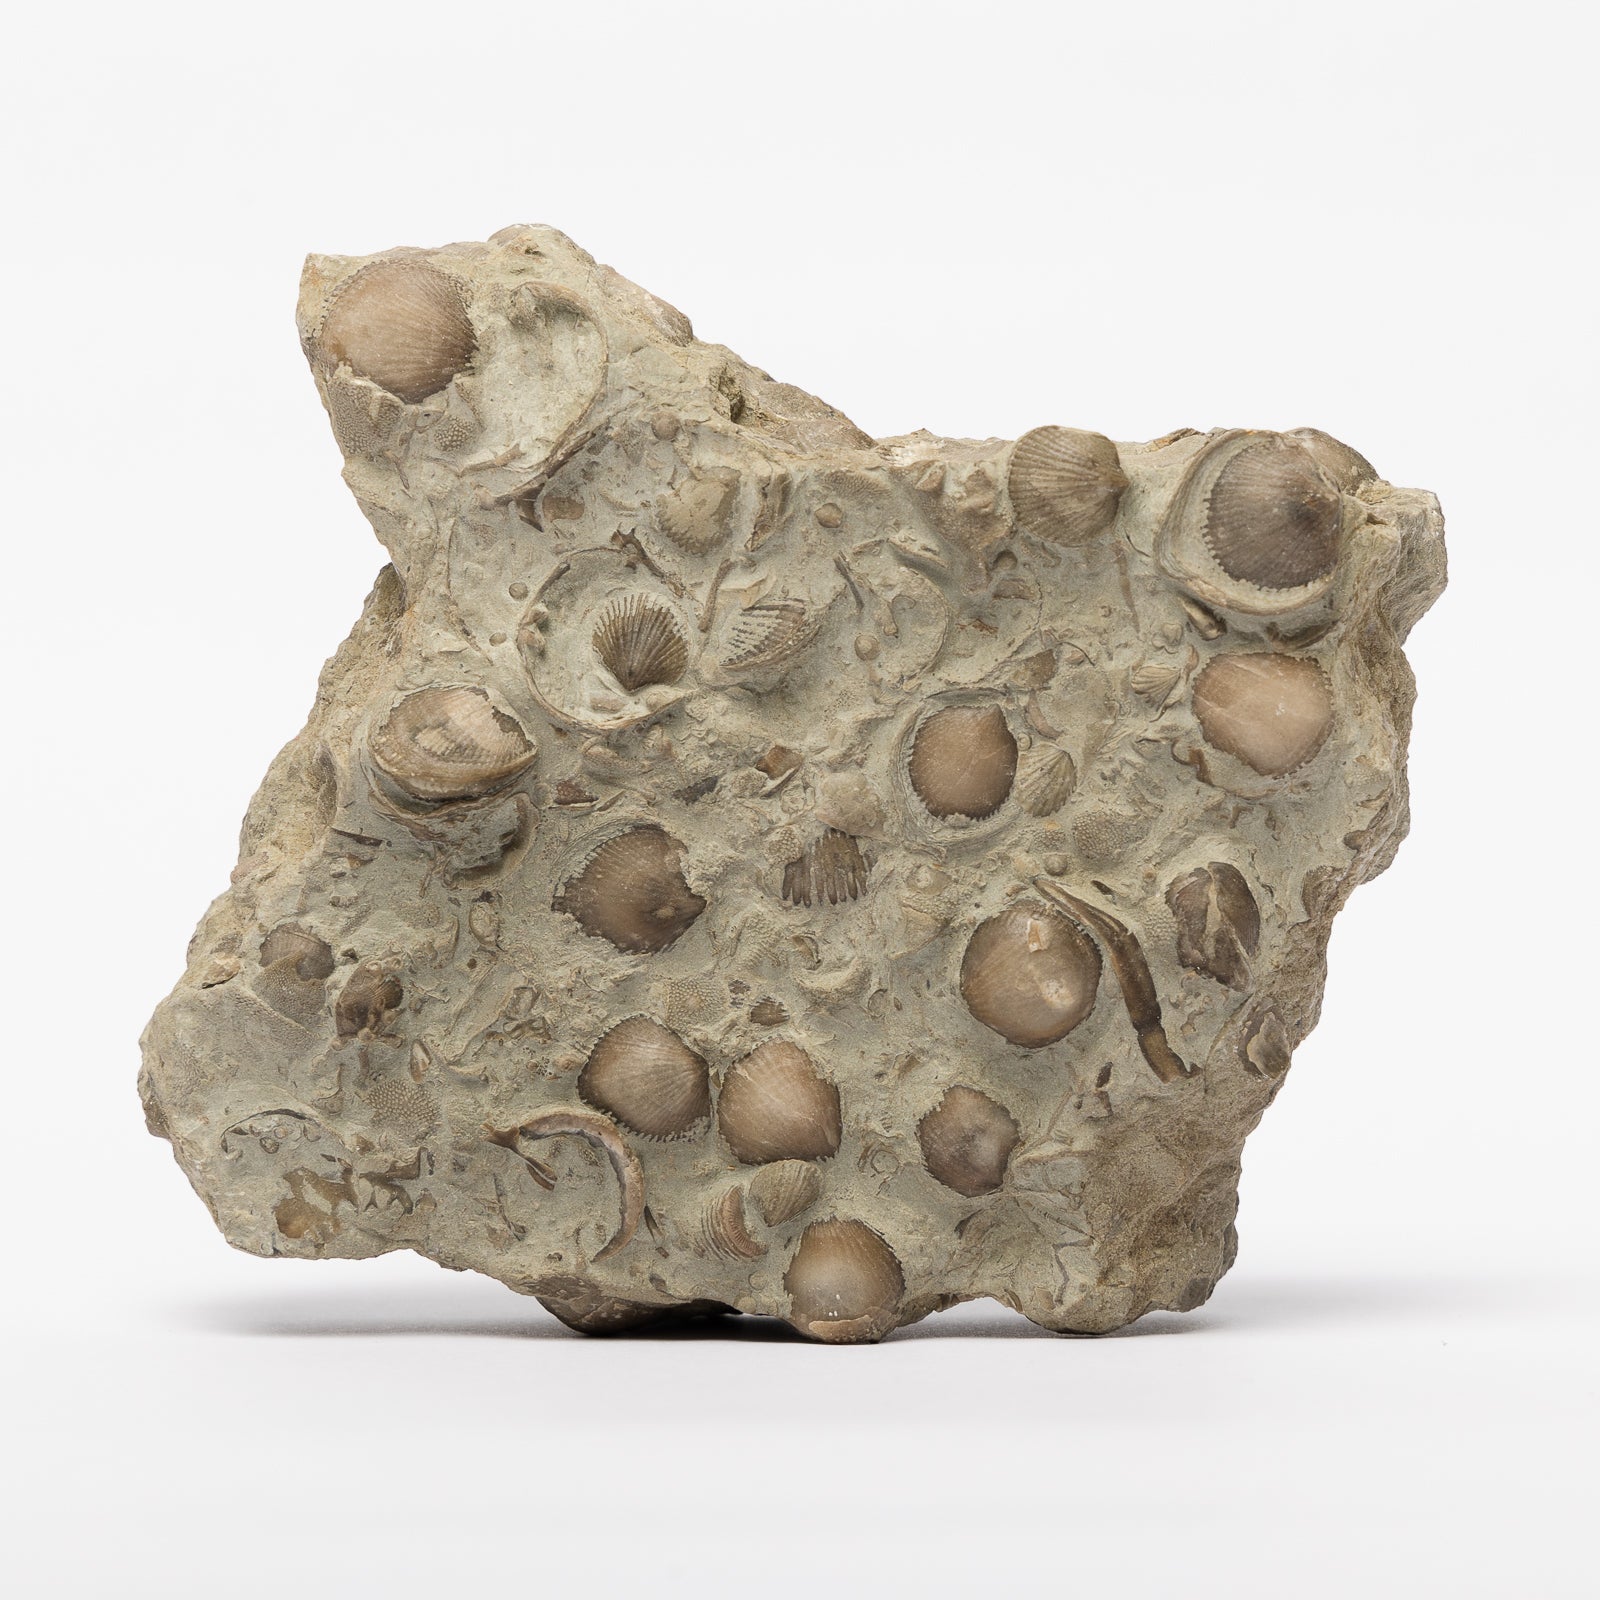 Wenlock Limestone - Corals, Crinoids, Bryozoans & Brachiopods